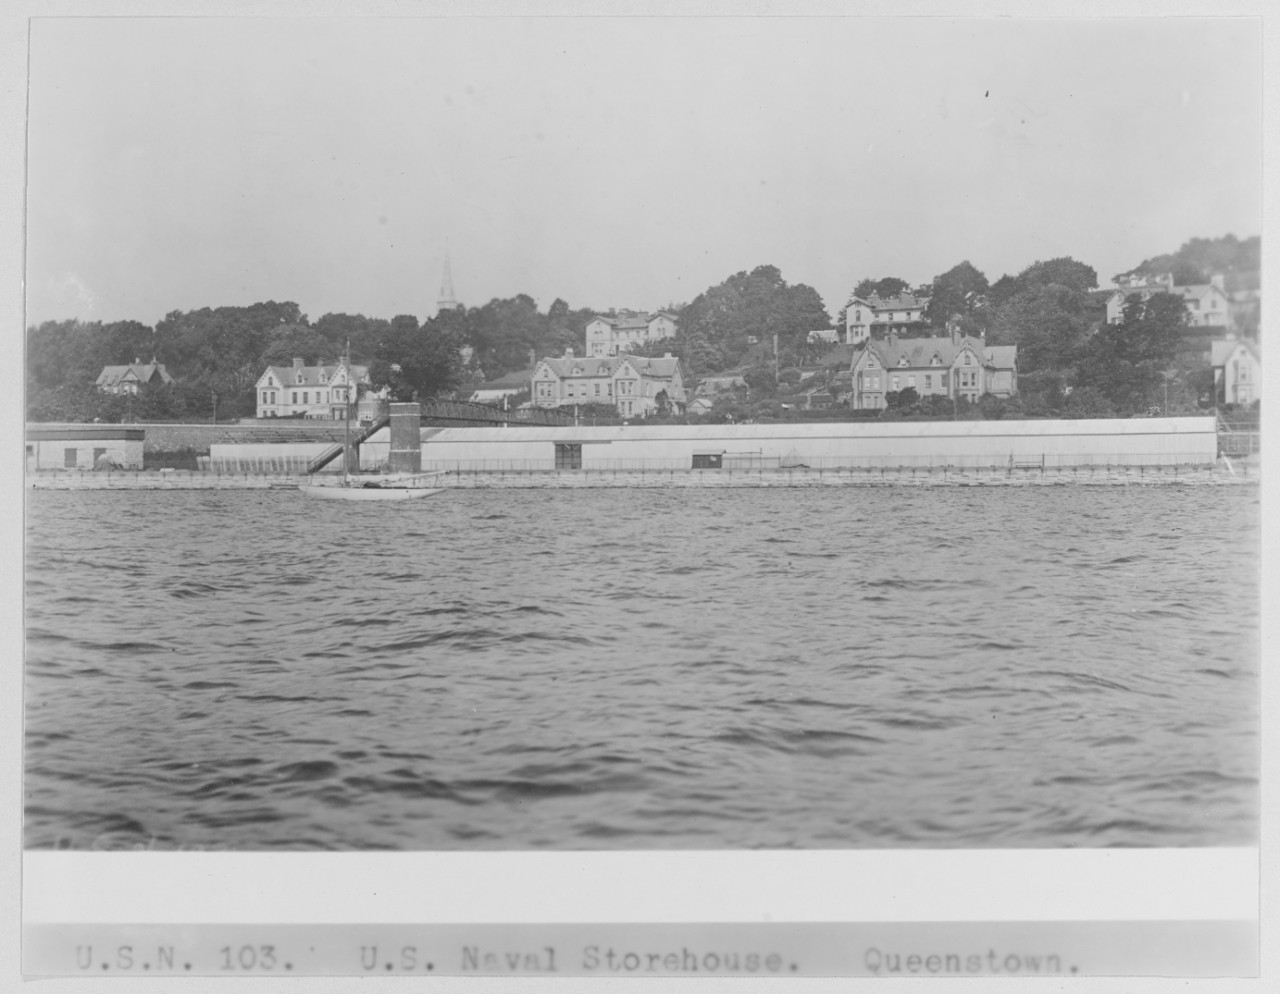 U.S.Naval storehouse